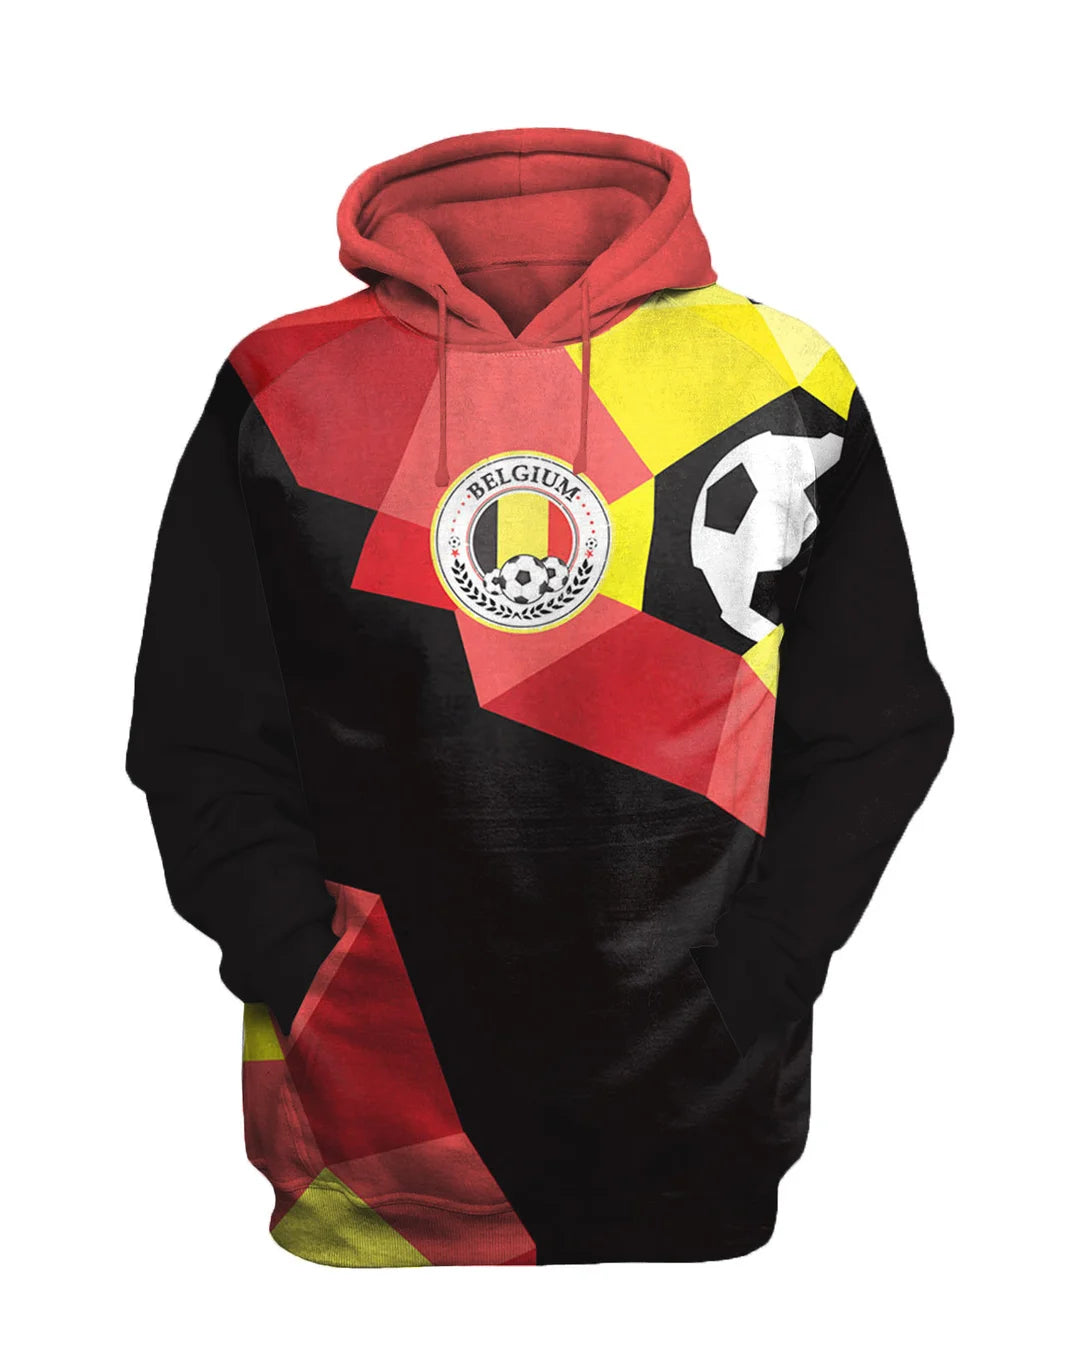 Belgium National Football Team Printed Sweatshirt Set - DUVAL